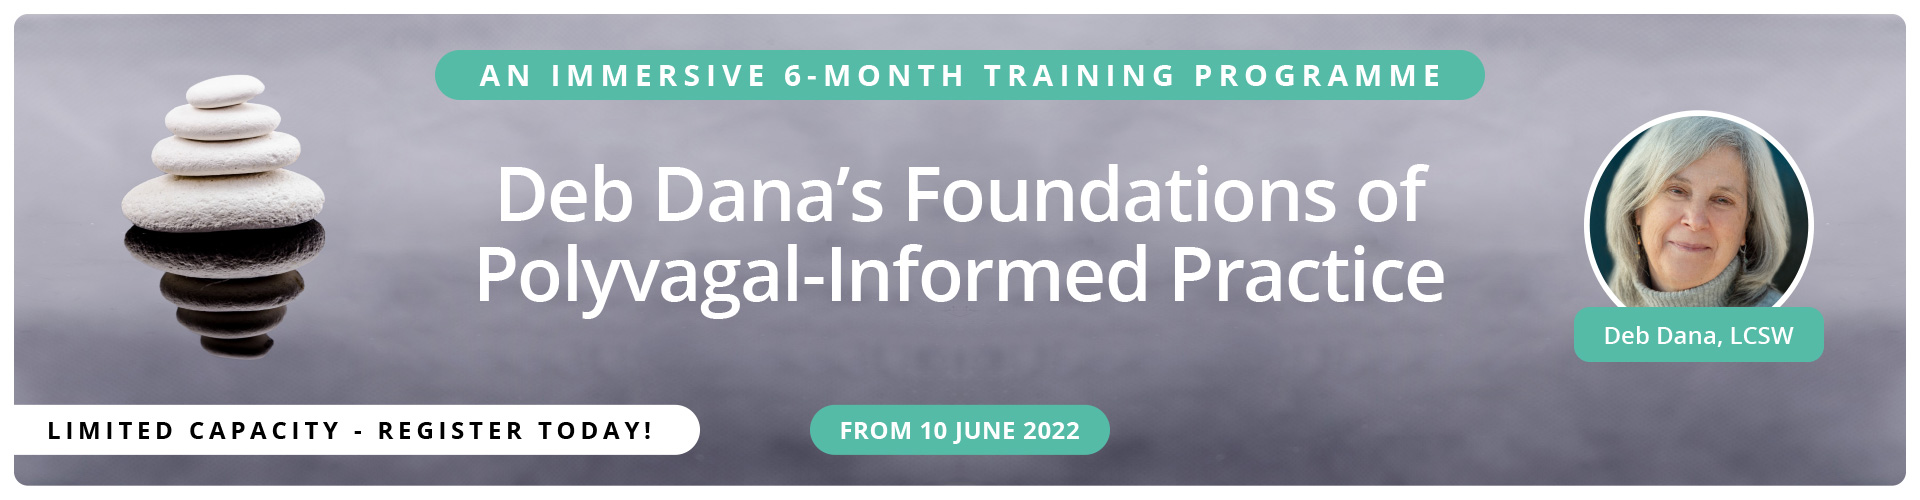 Deb Dana’s Foundations of Polyvagal-Informed Practice 